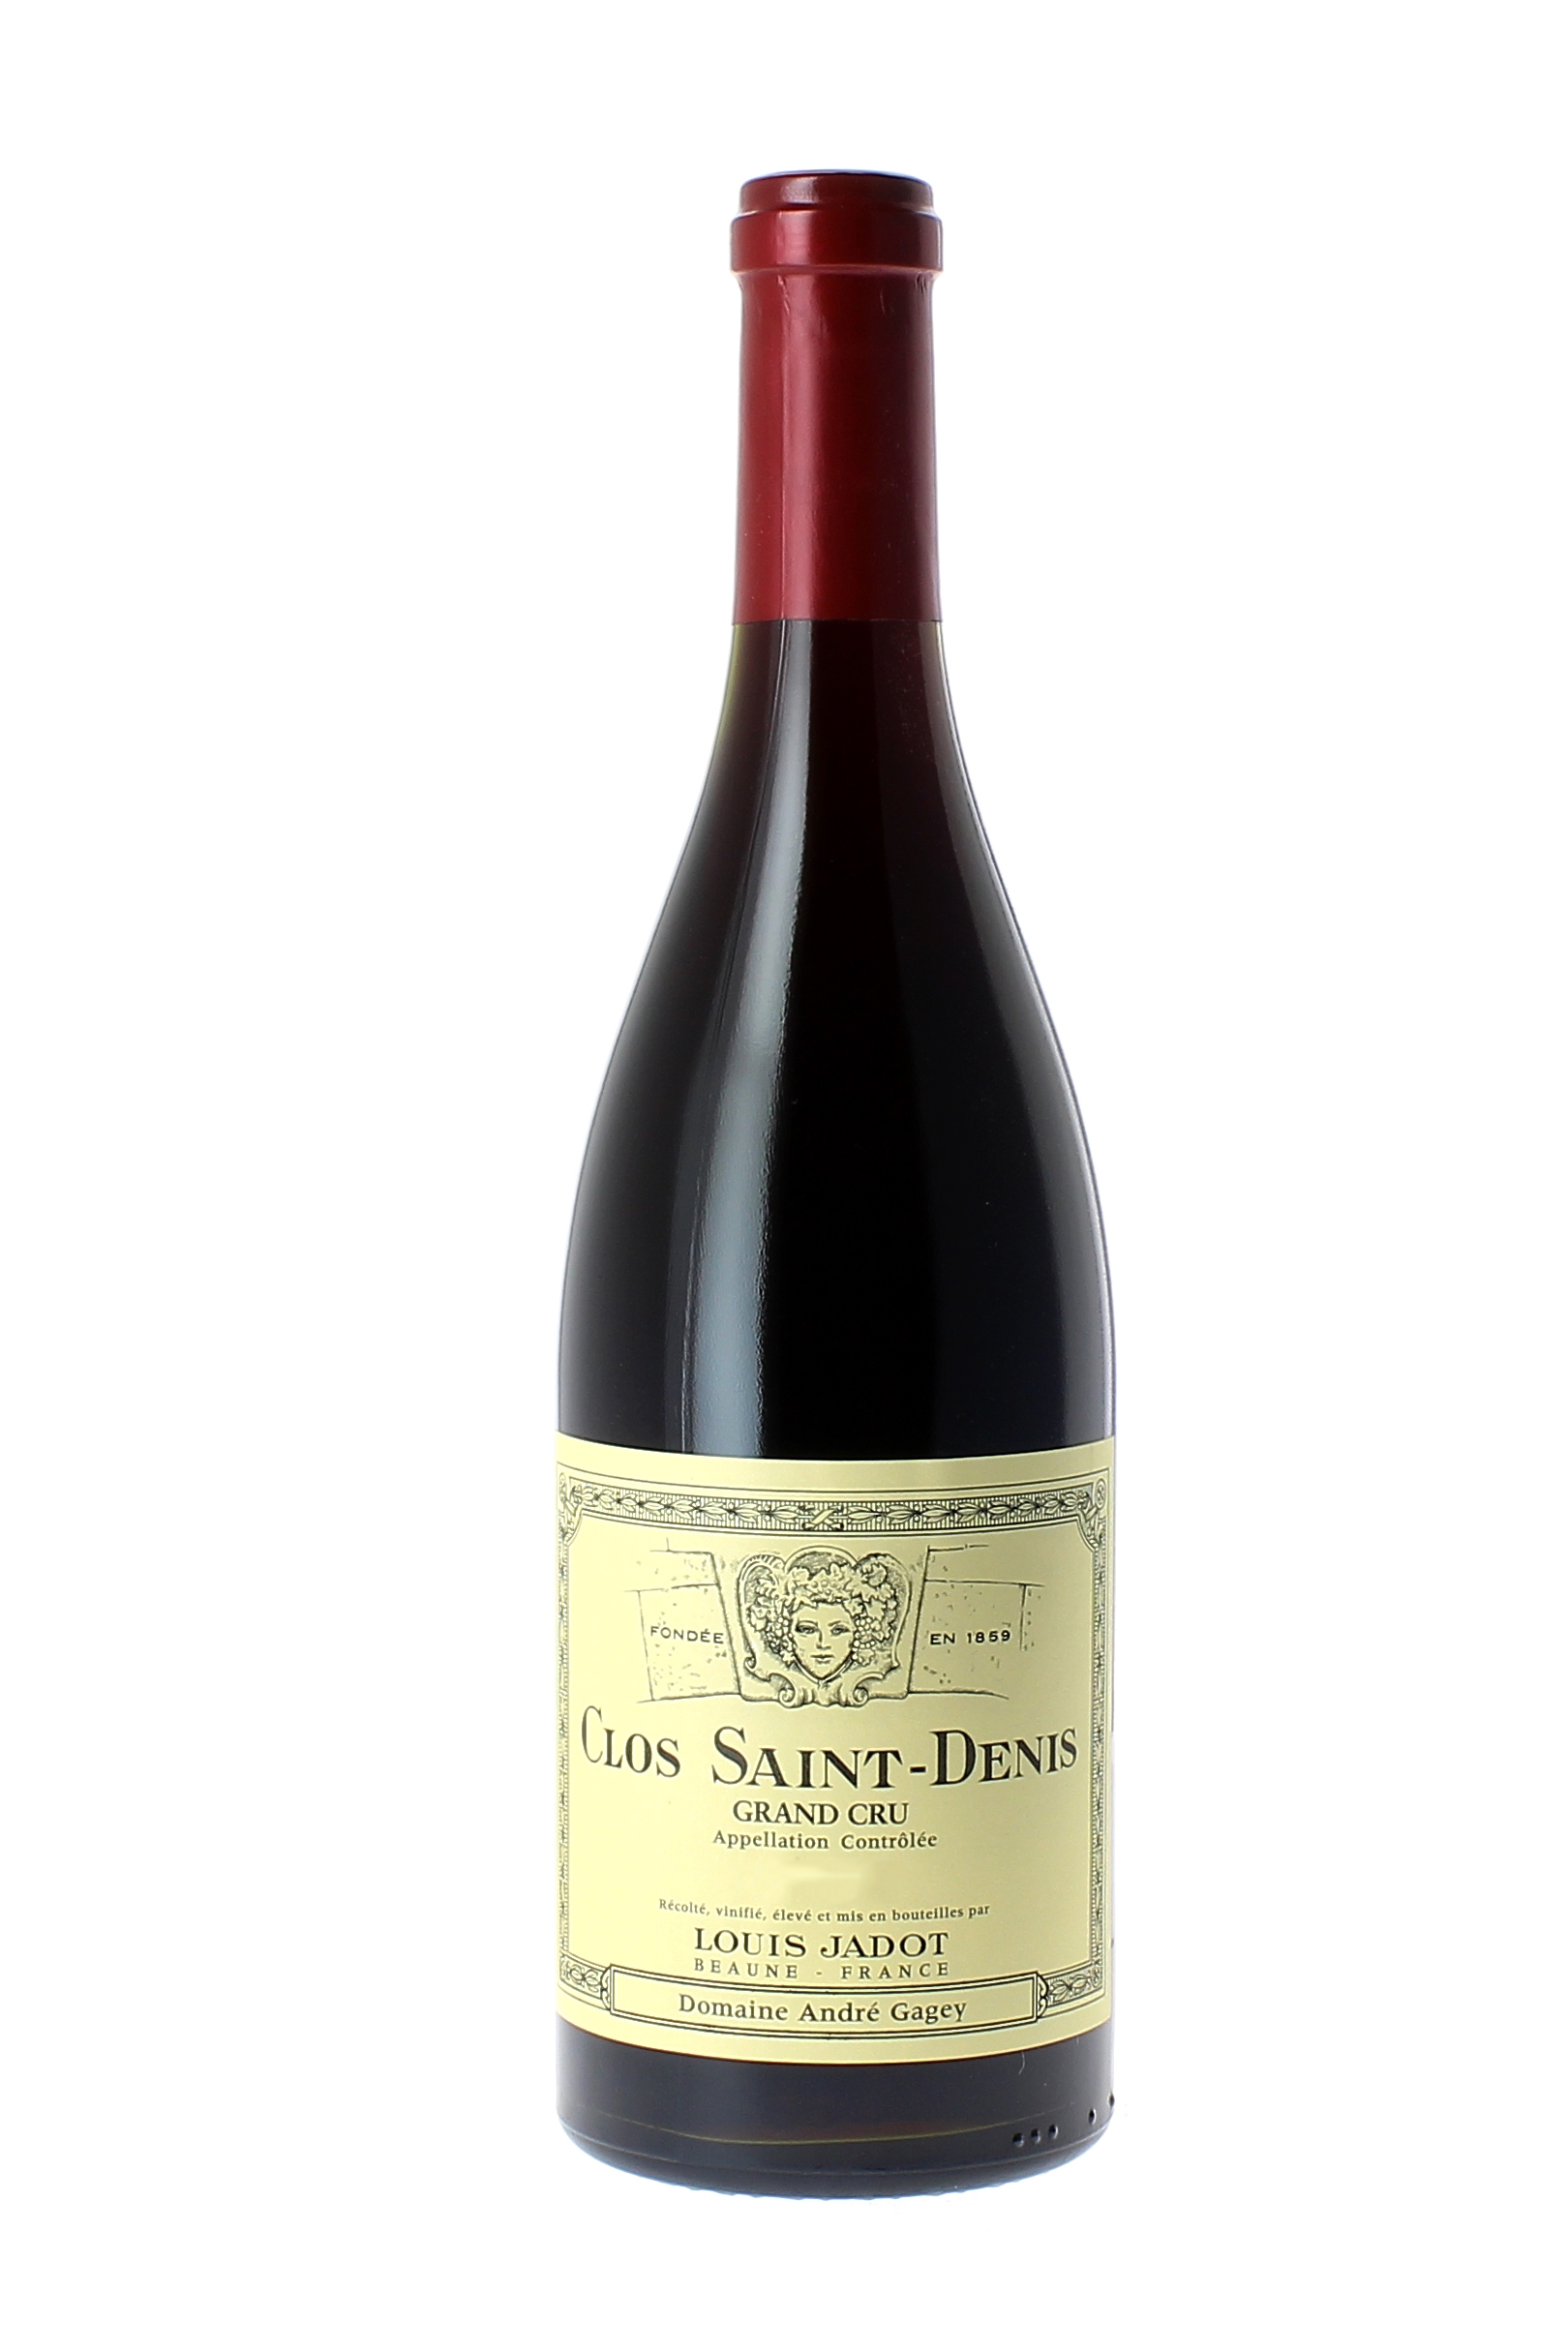 Clos saint denis grand cru 2012  JADOT Louis, Bourgogne rouge